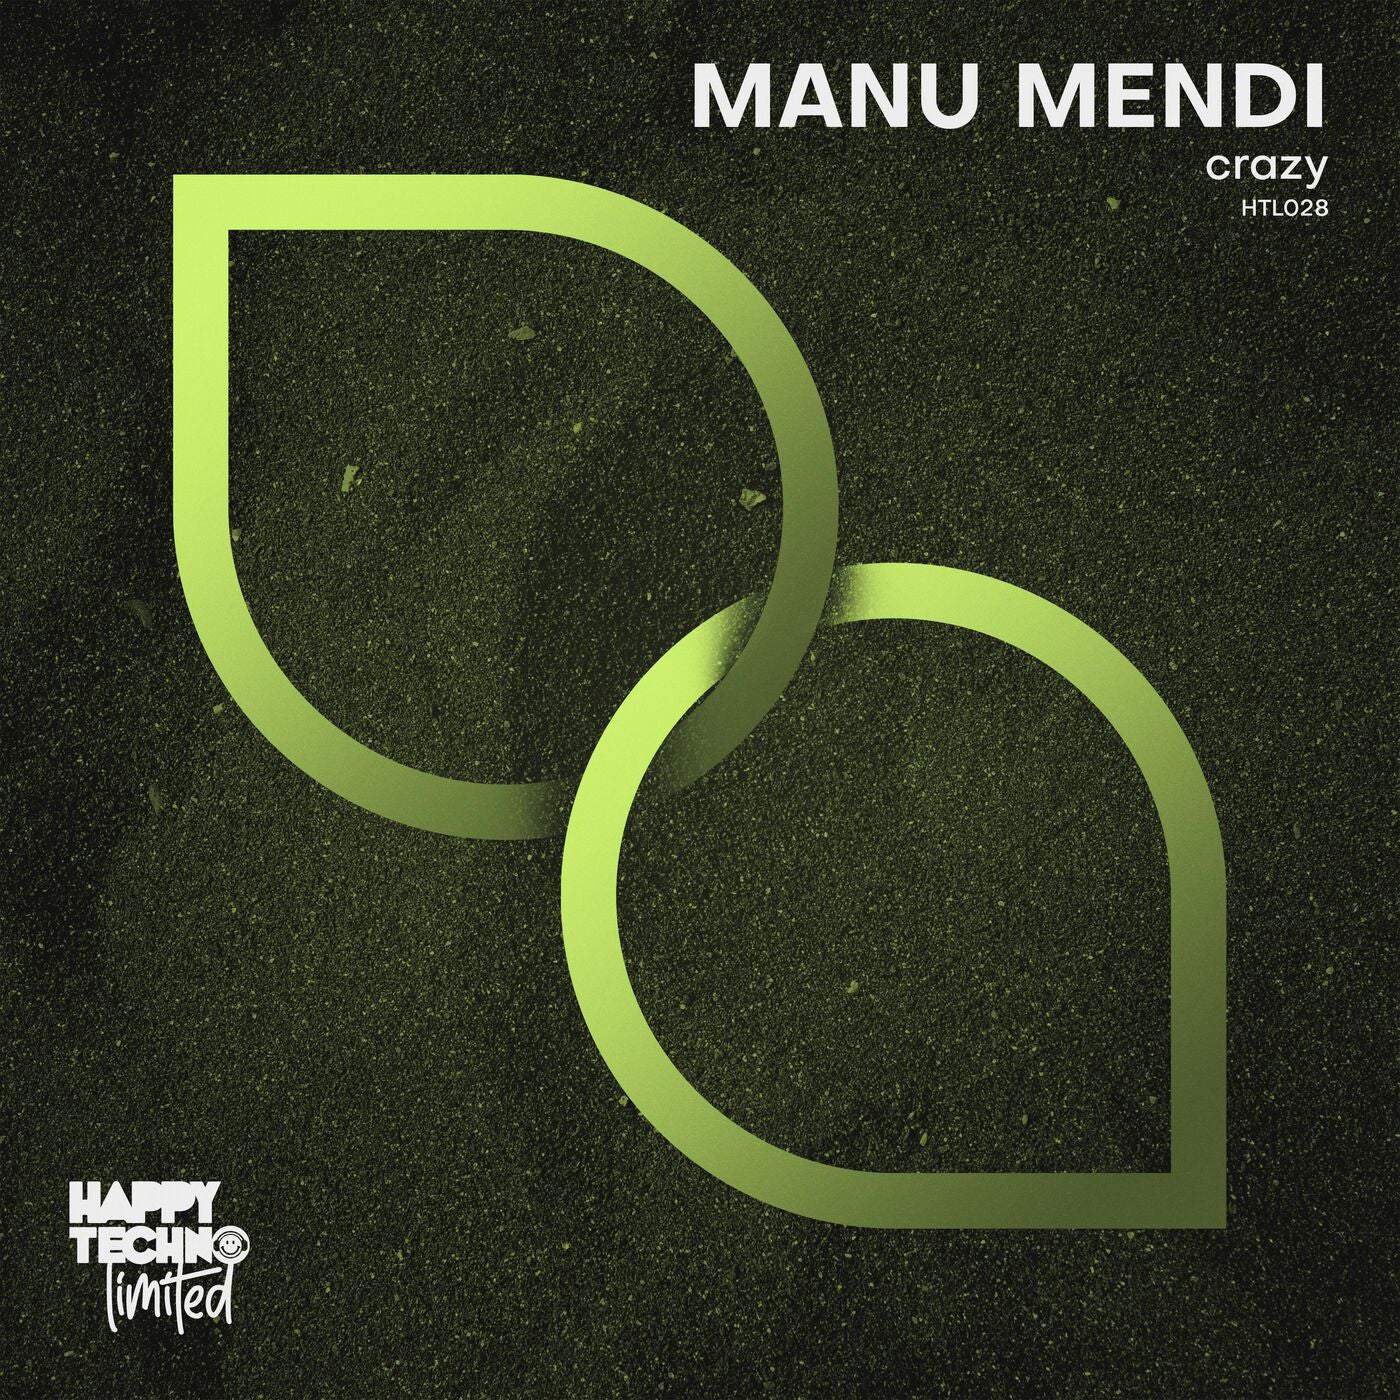 image cover: Manu Mendi - Crazy / HTL028